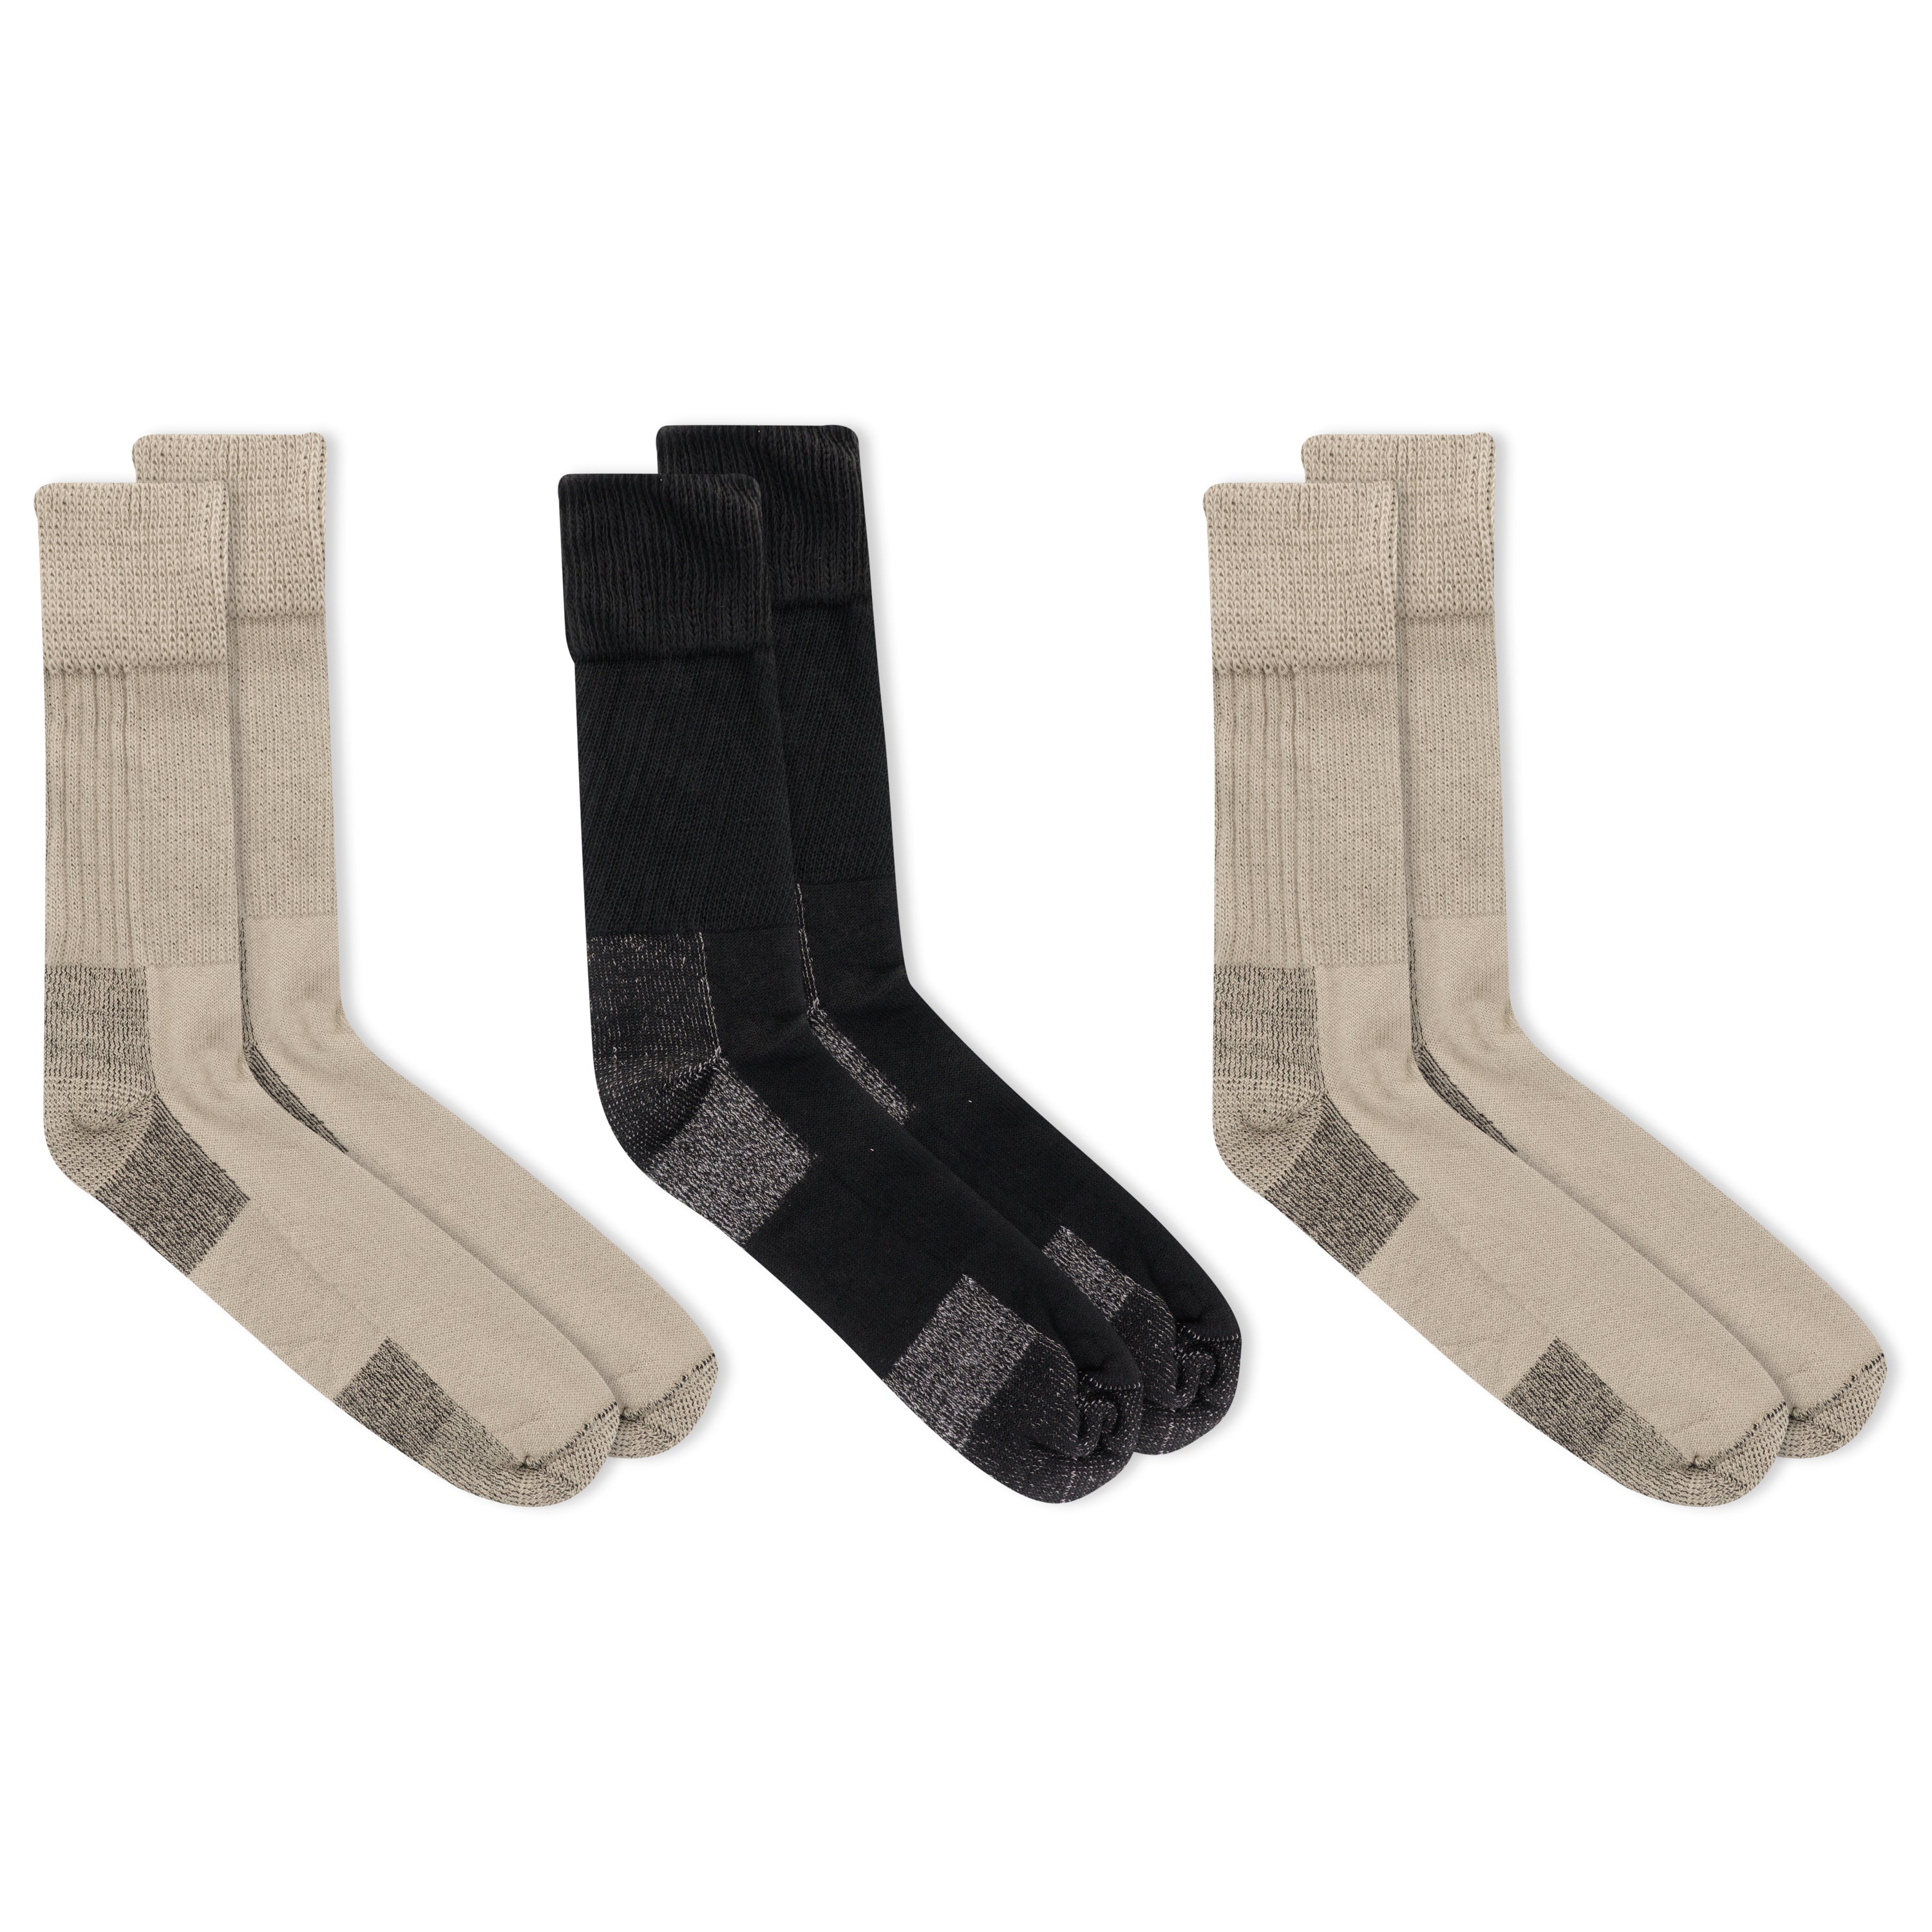 Buy Scholl Flight Socks Unisex 6-9, Free Delivery to HK